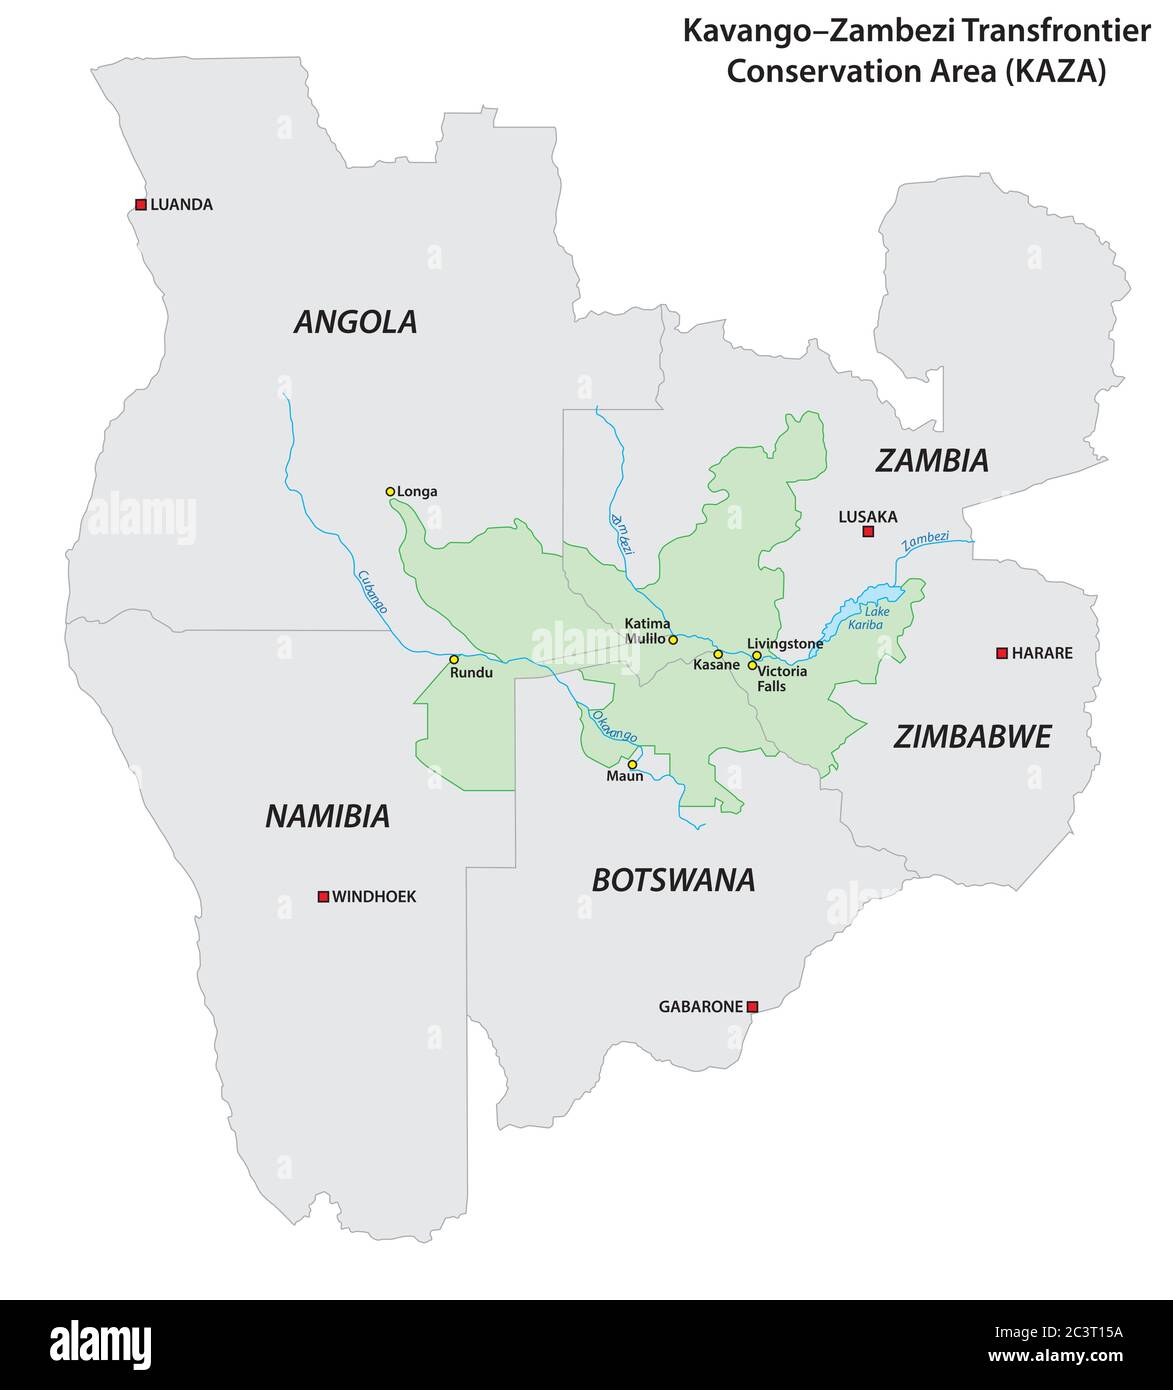 Vektorkarte des Kavango-Zambezi Transfrontier Conservation Area (KAZA) im südlichen Afrika Stock Vektor